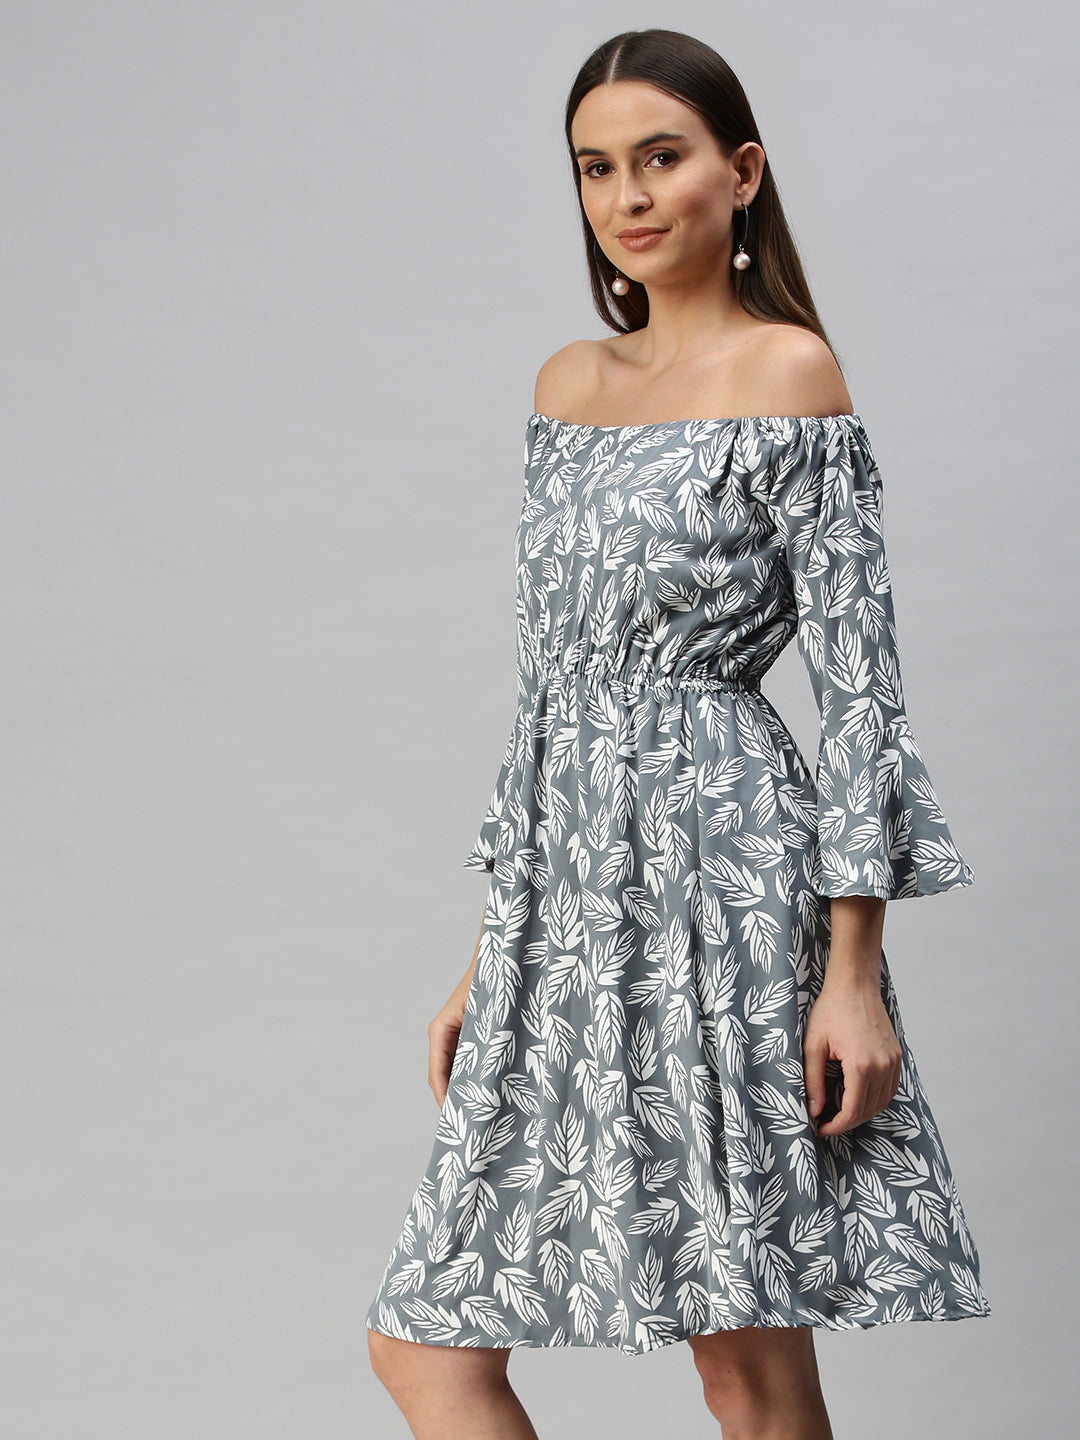 Women's A-Line Grey Dress